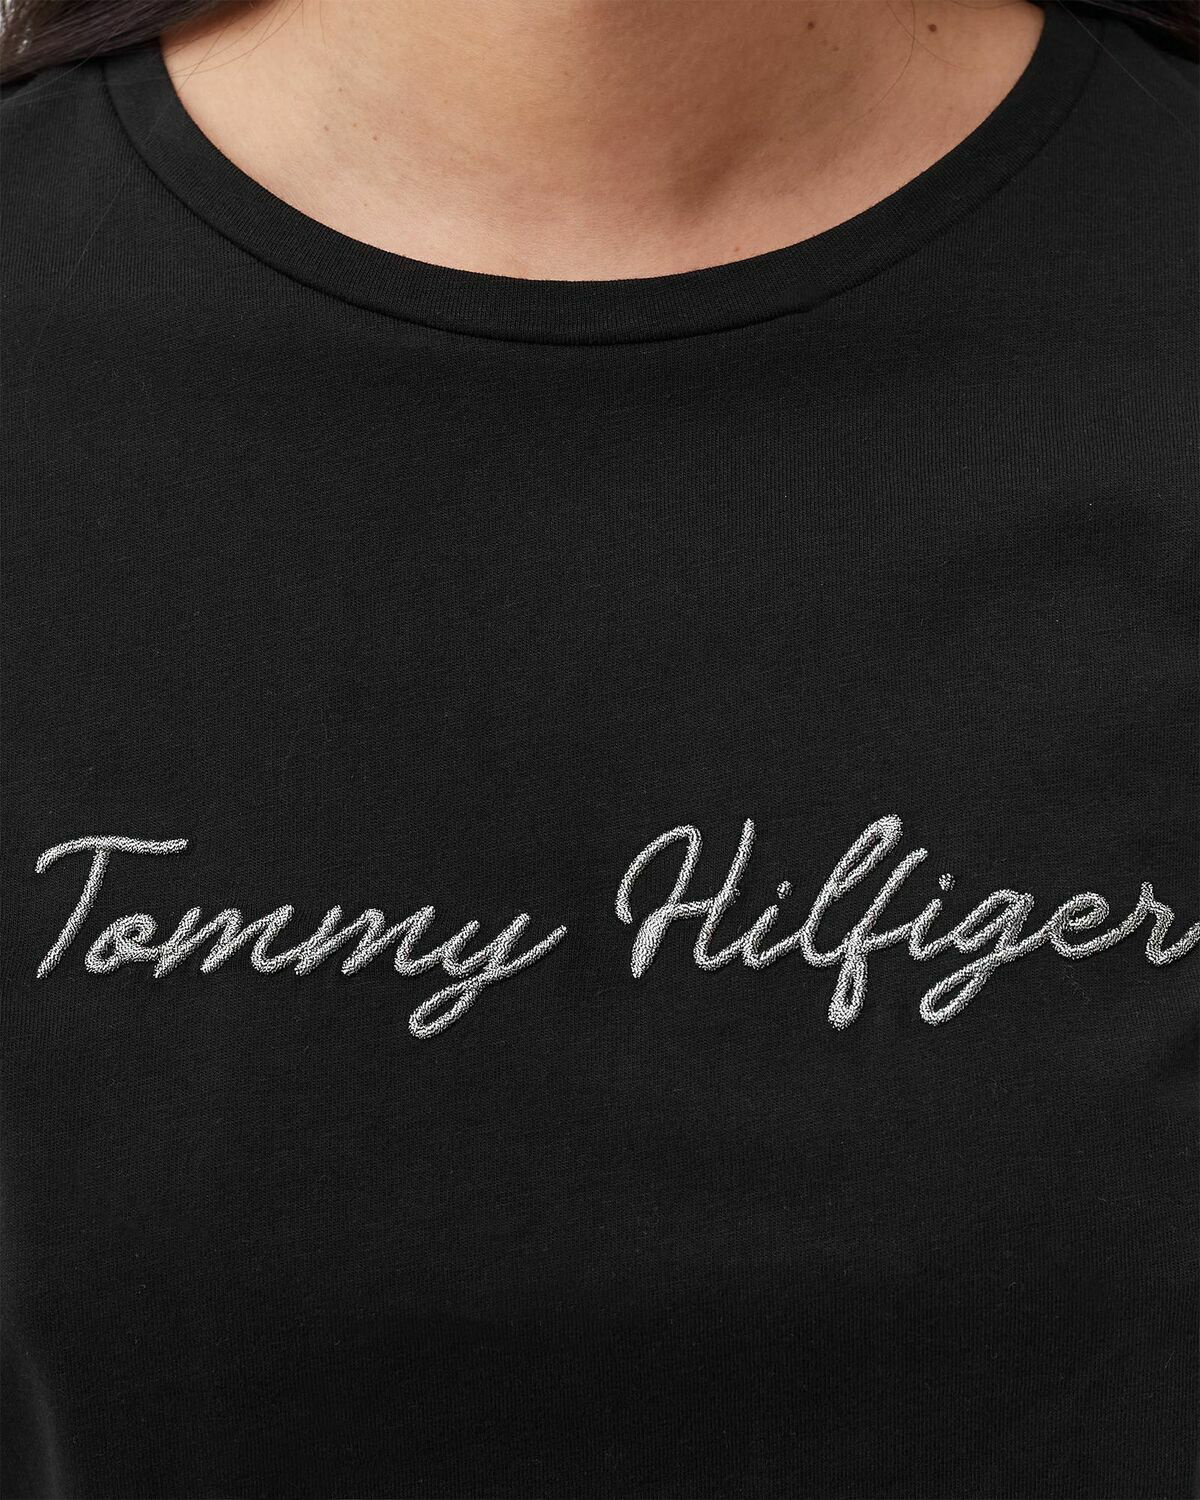 Tommy Hilfiger Wmns Unlined Bralette Blue - Womens - (Sports ) Bras Tommy  Hilfiger